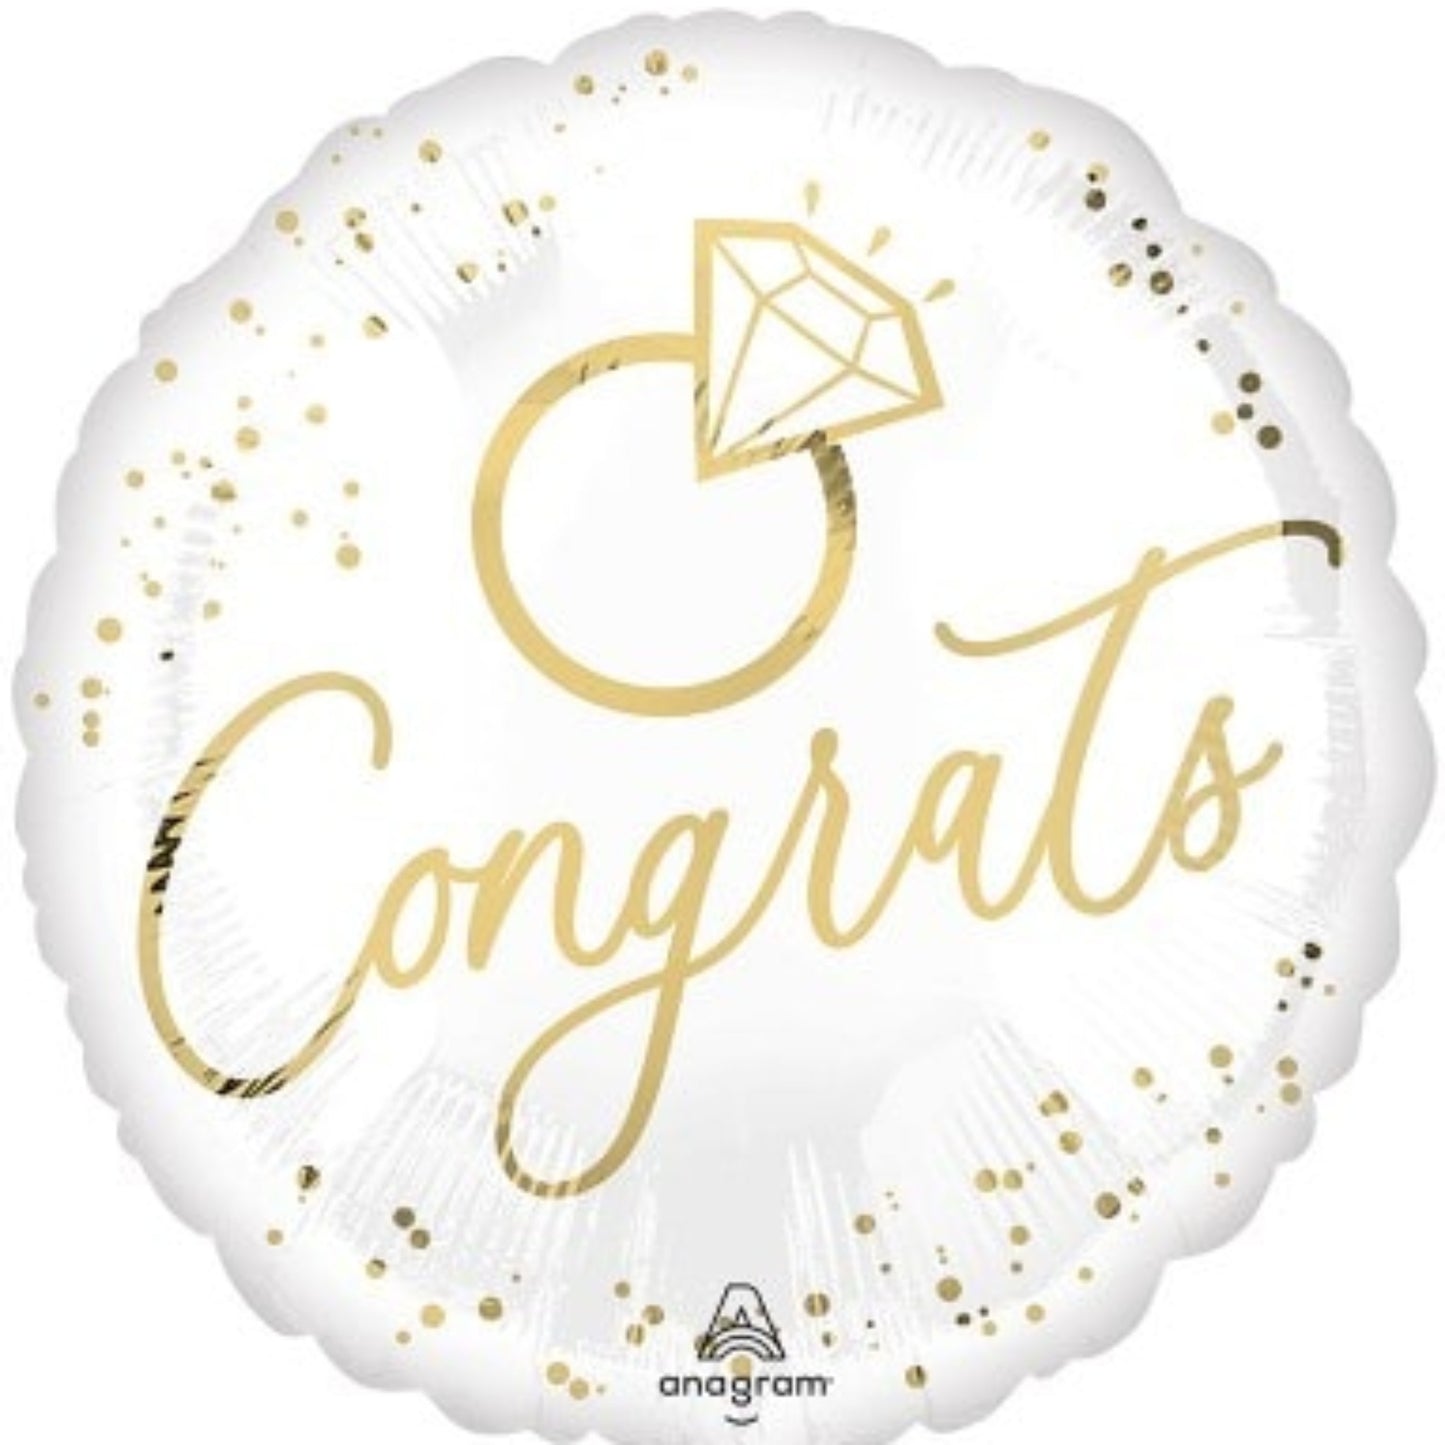 Congrats Engagement Balloon